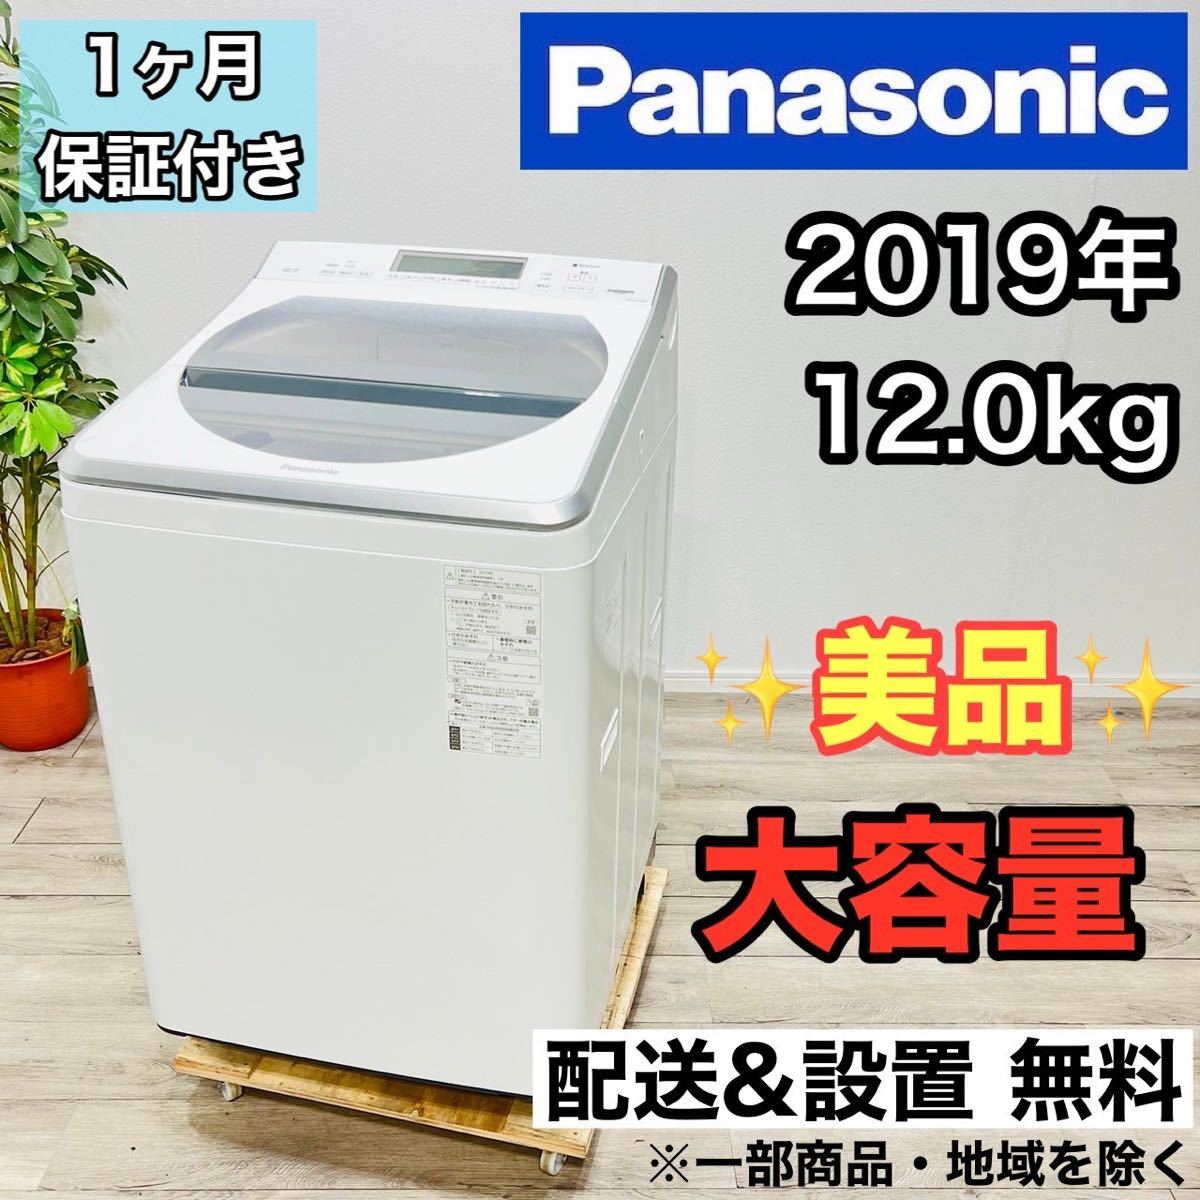 Panasonic a1858 洗濯機 12.0kg 2019年製 24